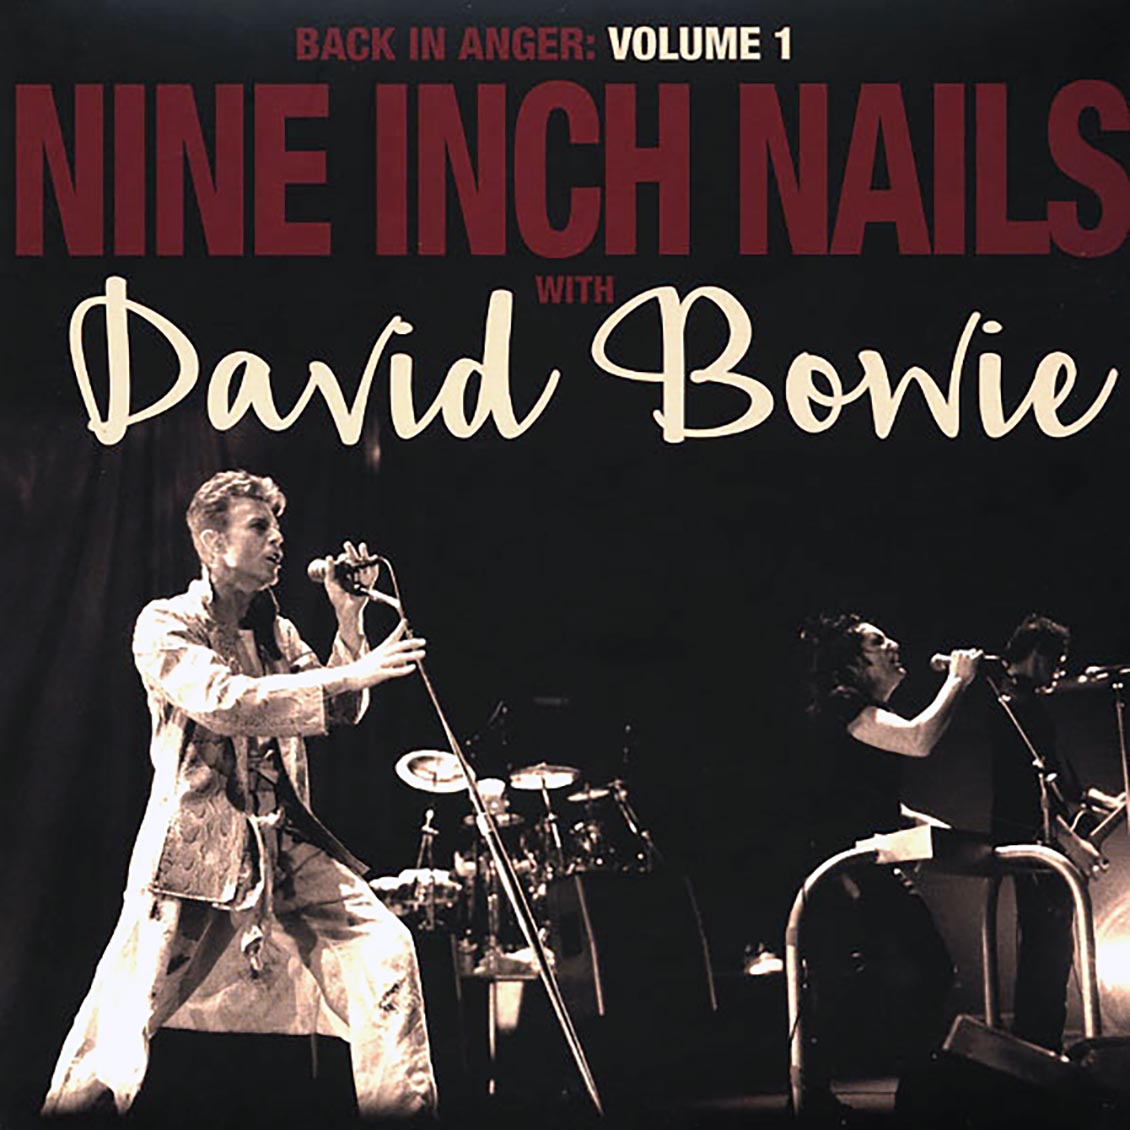 Nine Inch Nails, David Bowie - Back In Anger: Volume 1 (ltd. ed.) (2xLP) - Vinyl LP